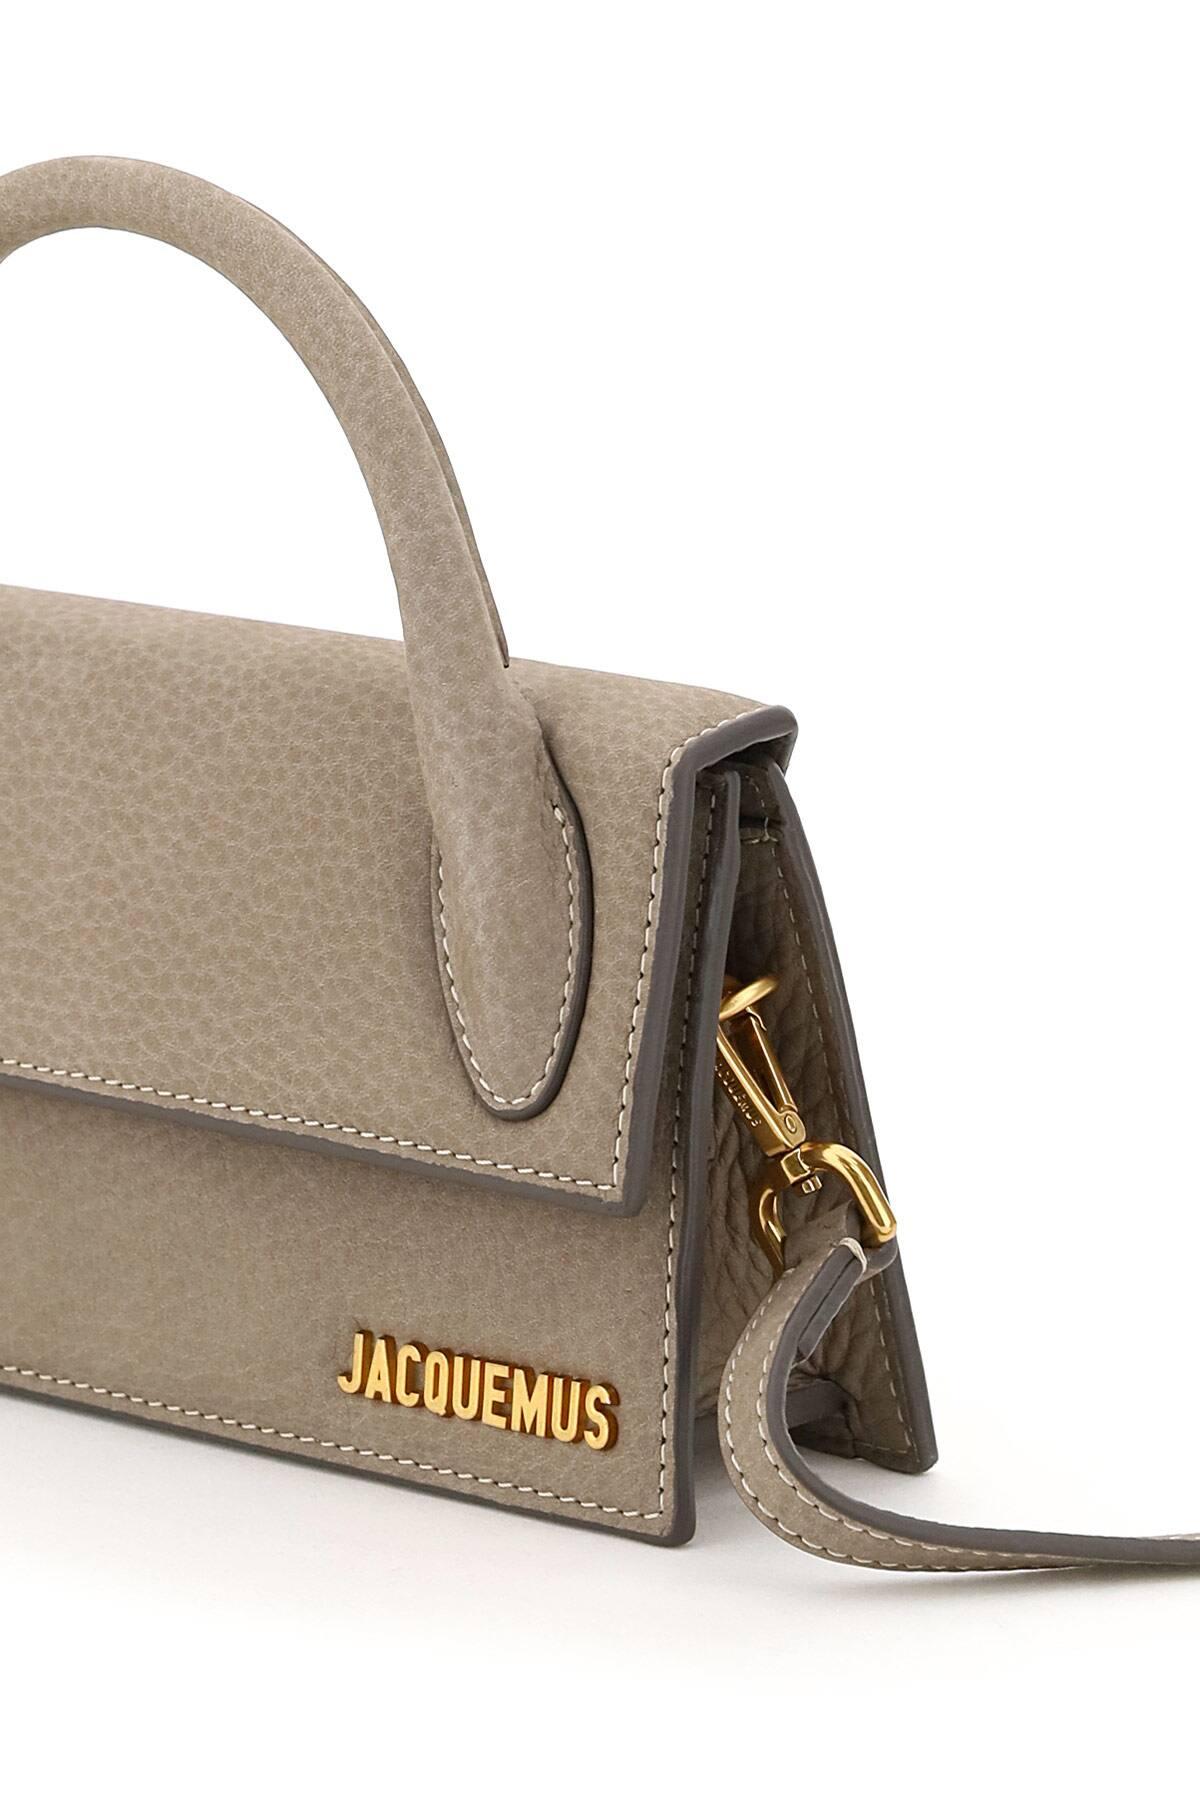 Jacquemus, Bags, Jacquemus Le Chiquito Long Bag